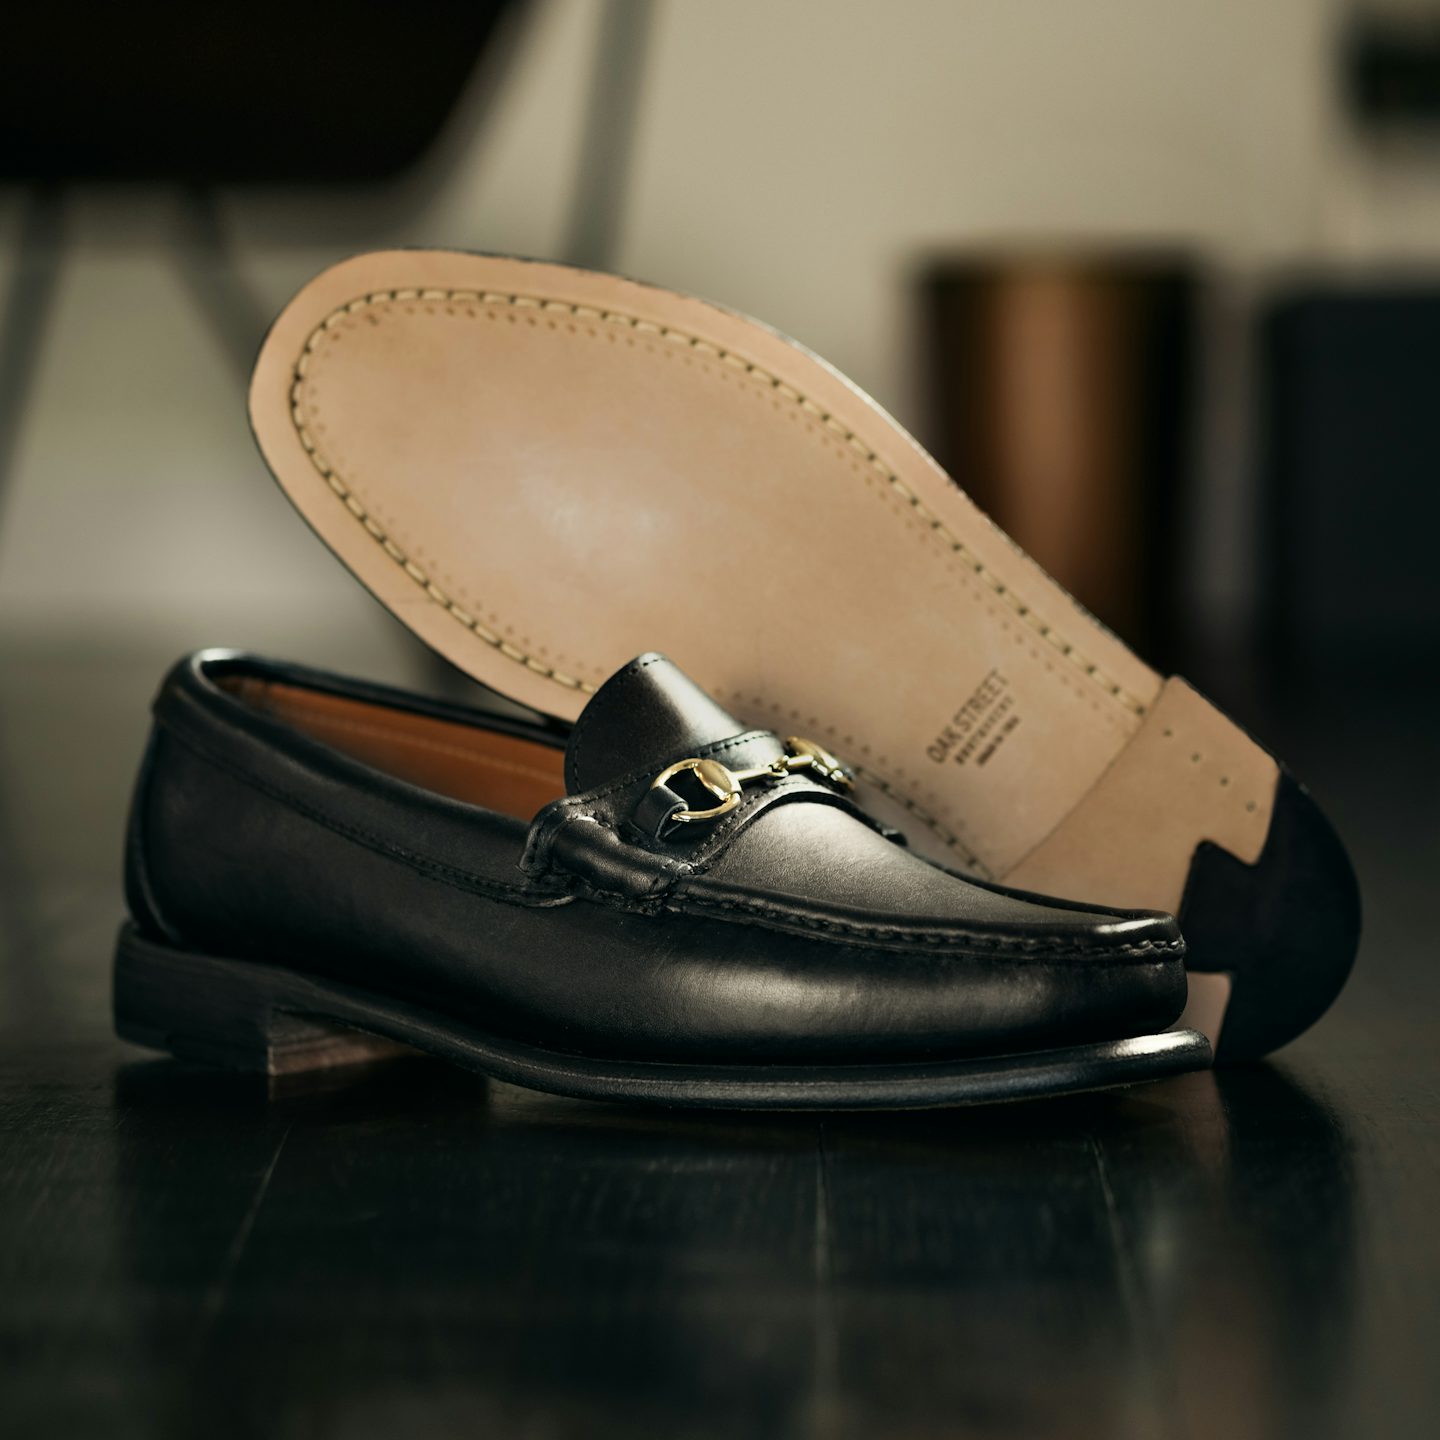 Bit Loafer - Black Latigo, Leather Sole with Dovetail Toplift